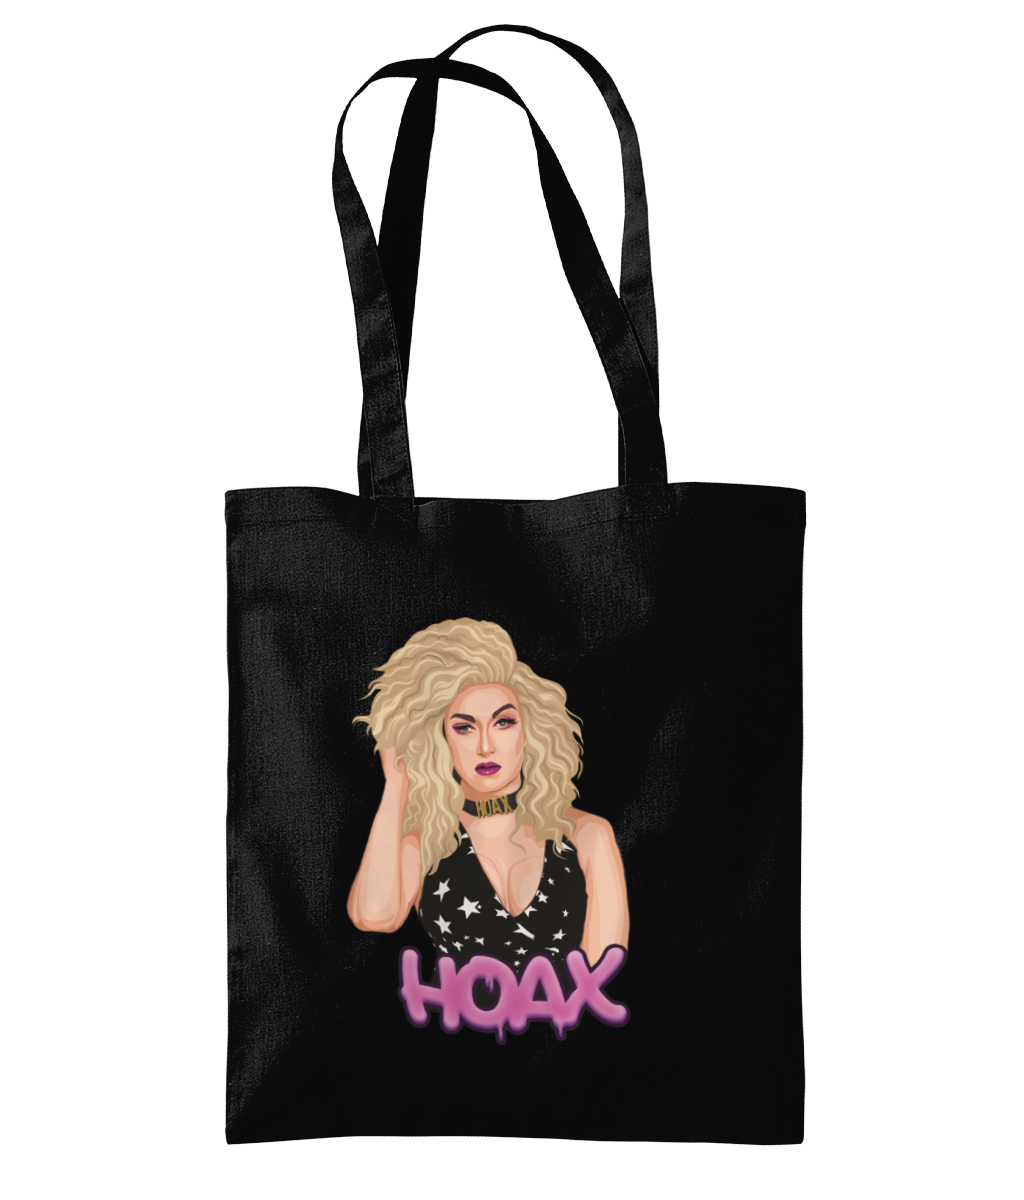 HOAX - Tote Bag